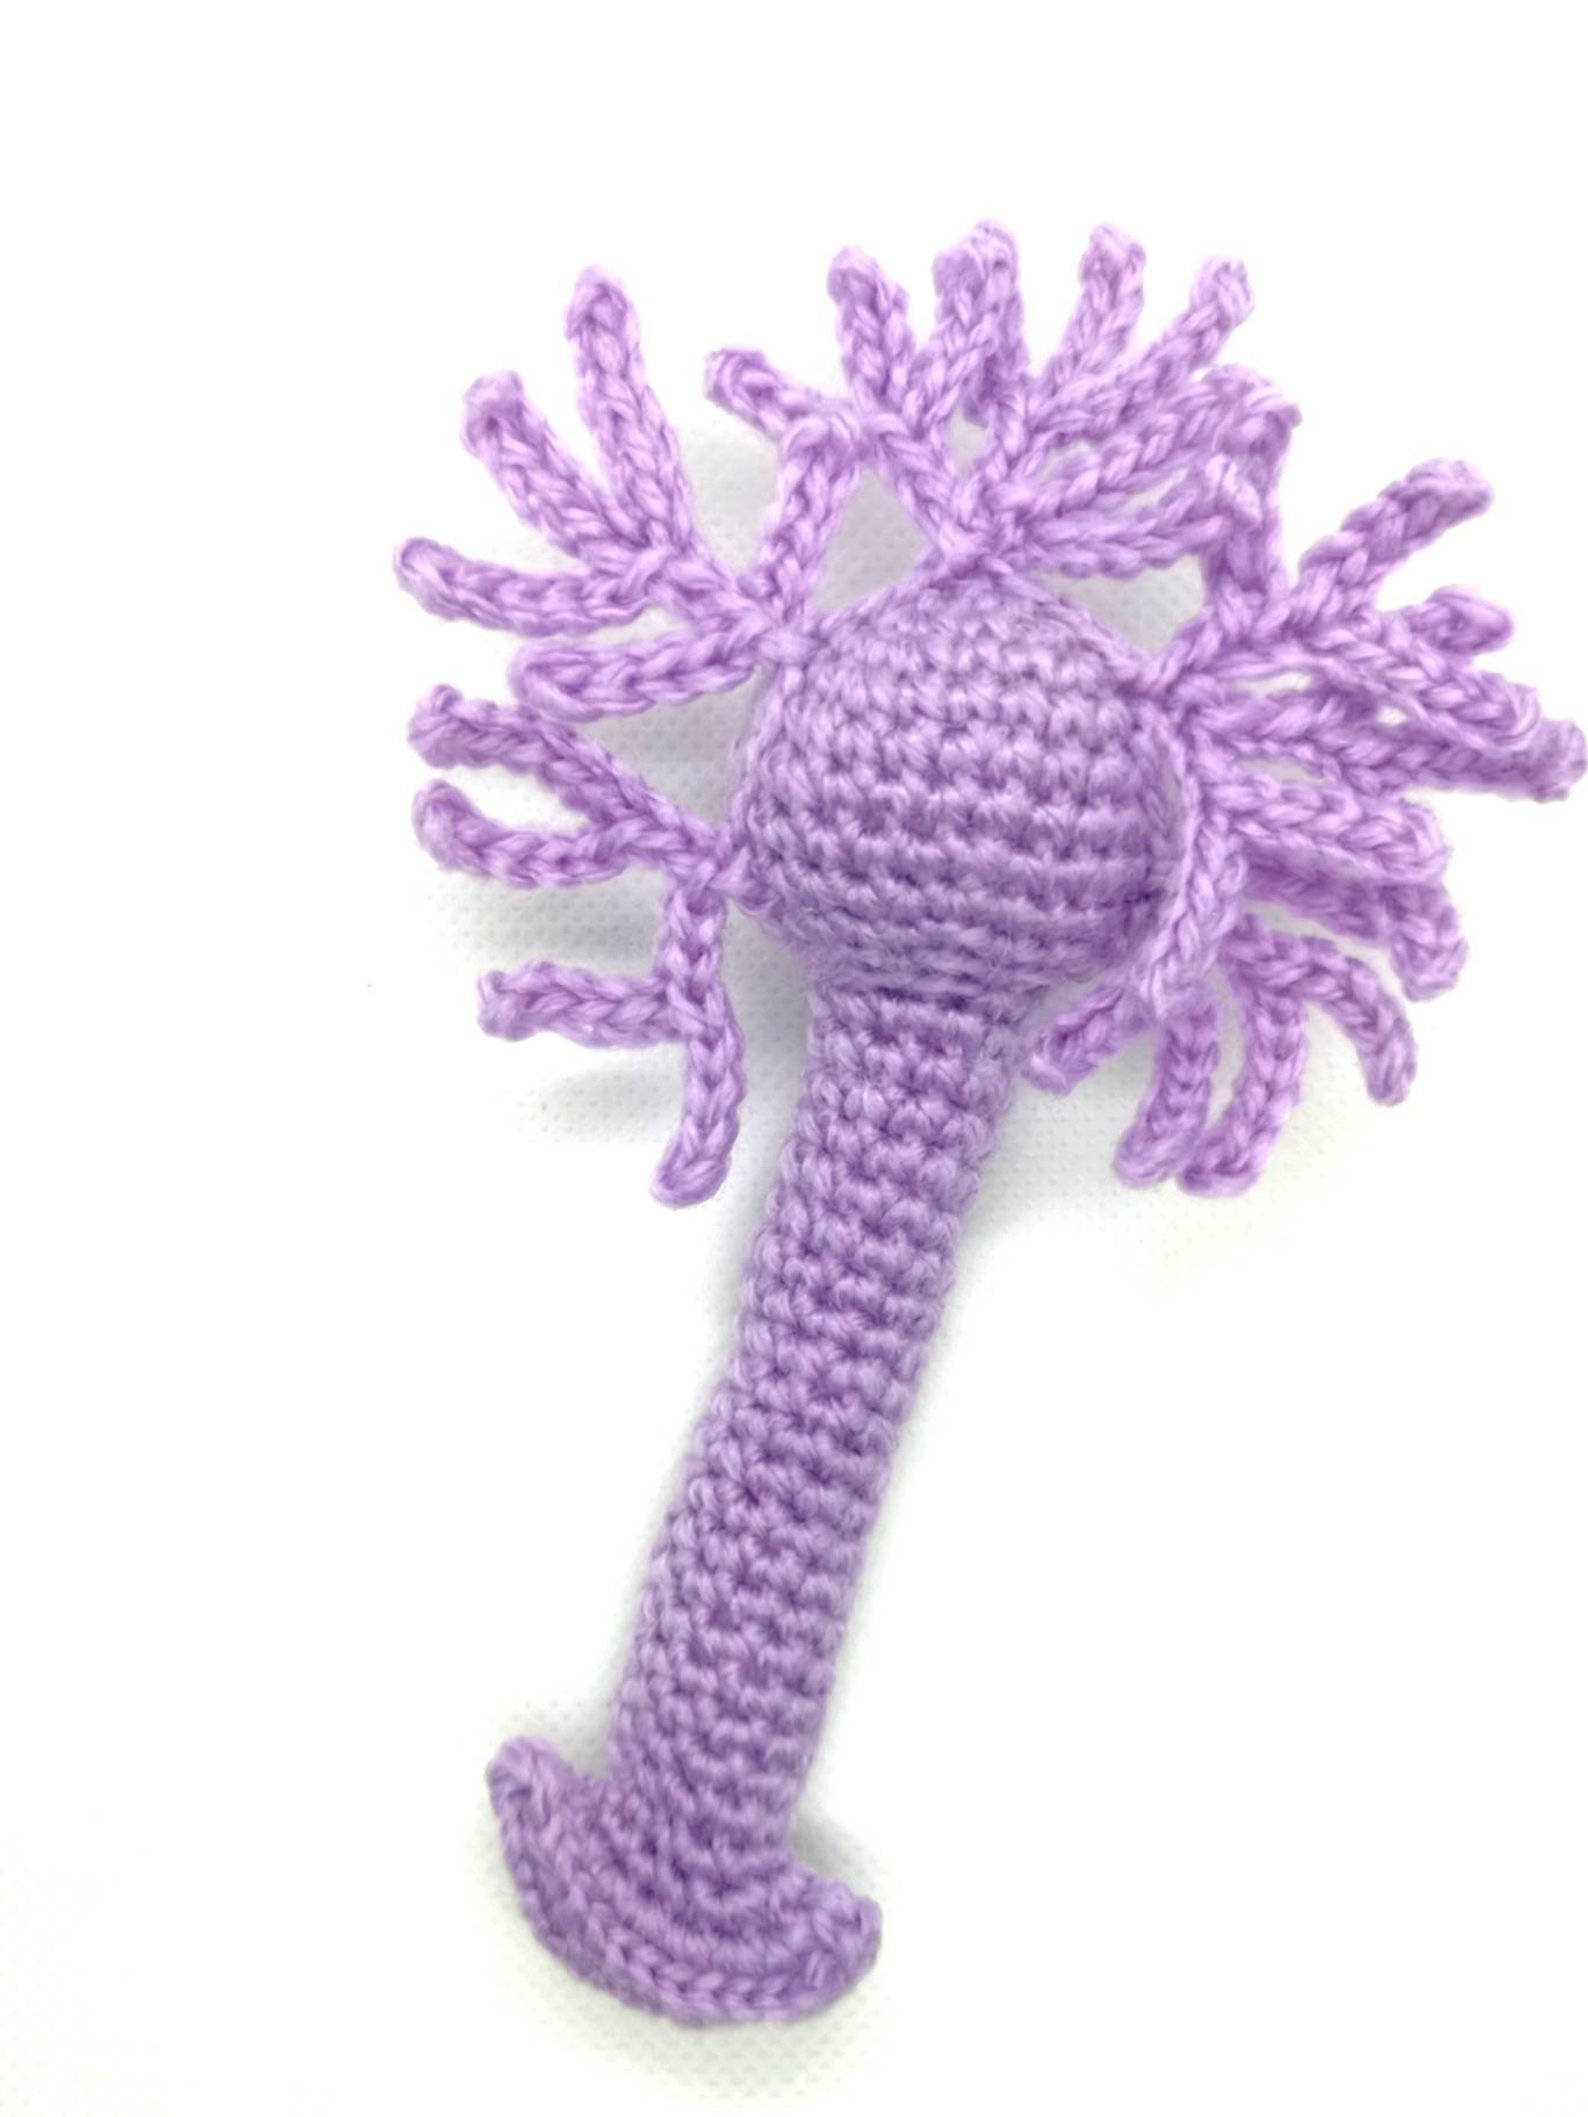 crocheted-neuron-1